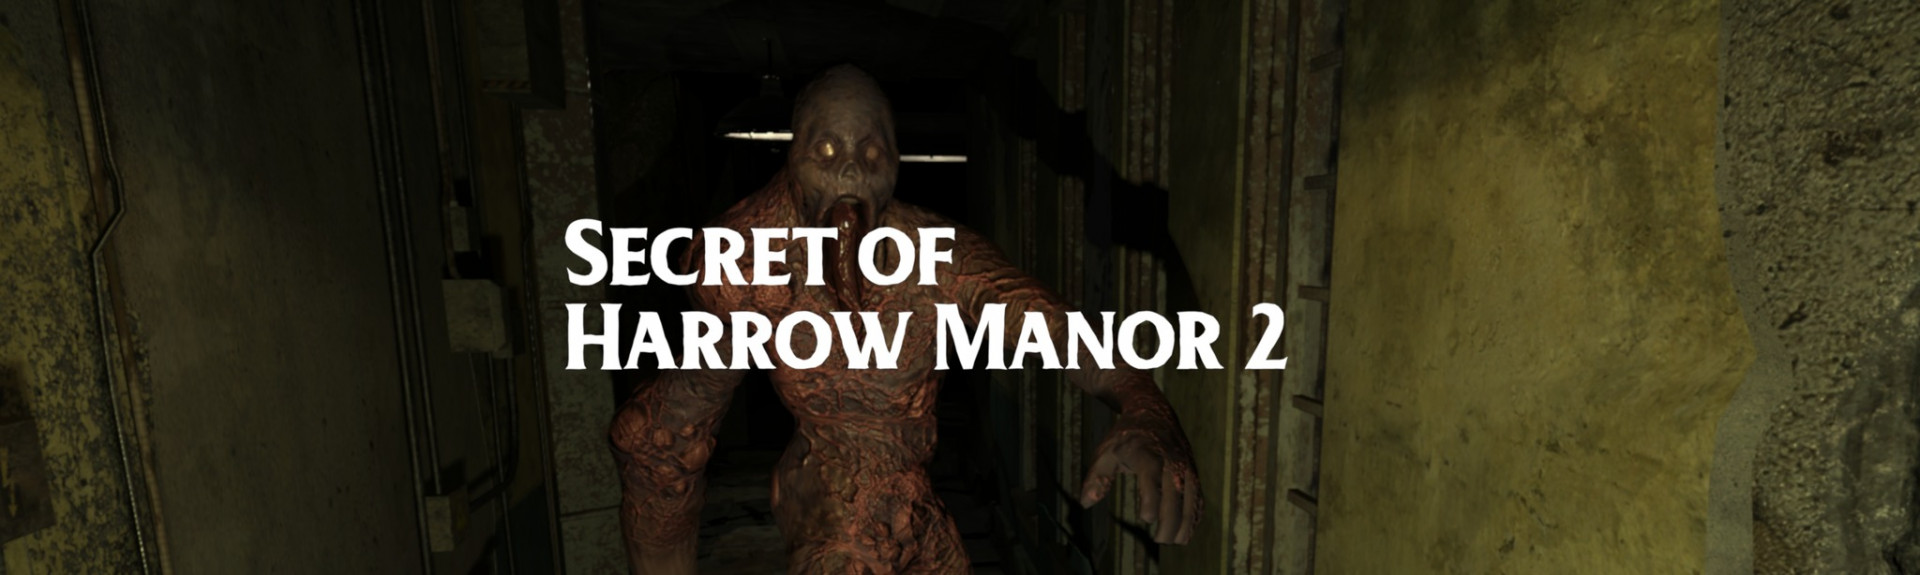 Secret of Harrow Manor 2